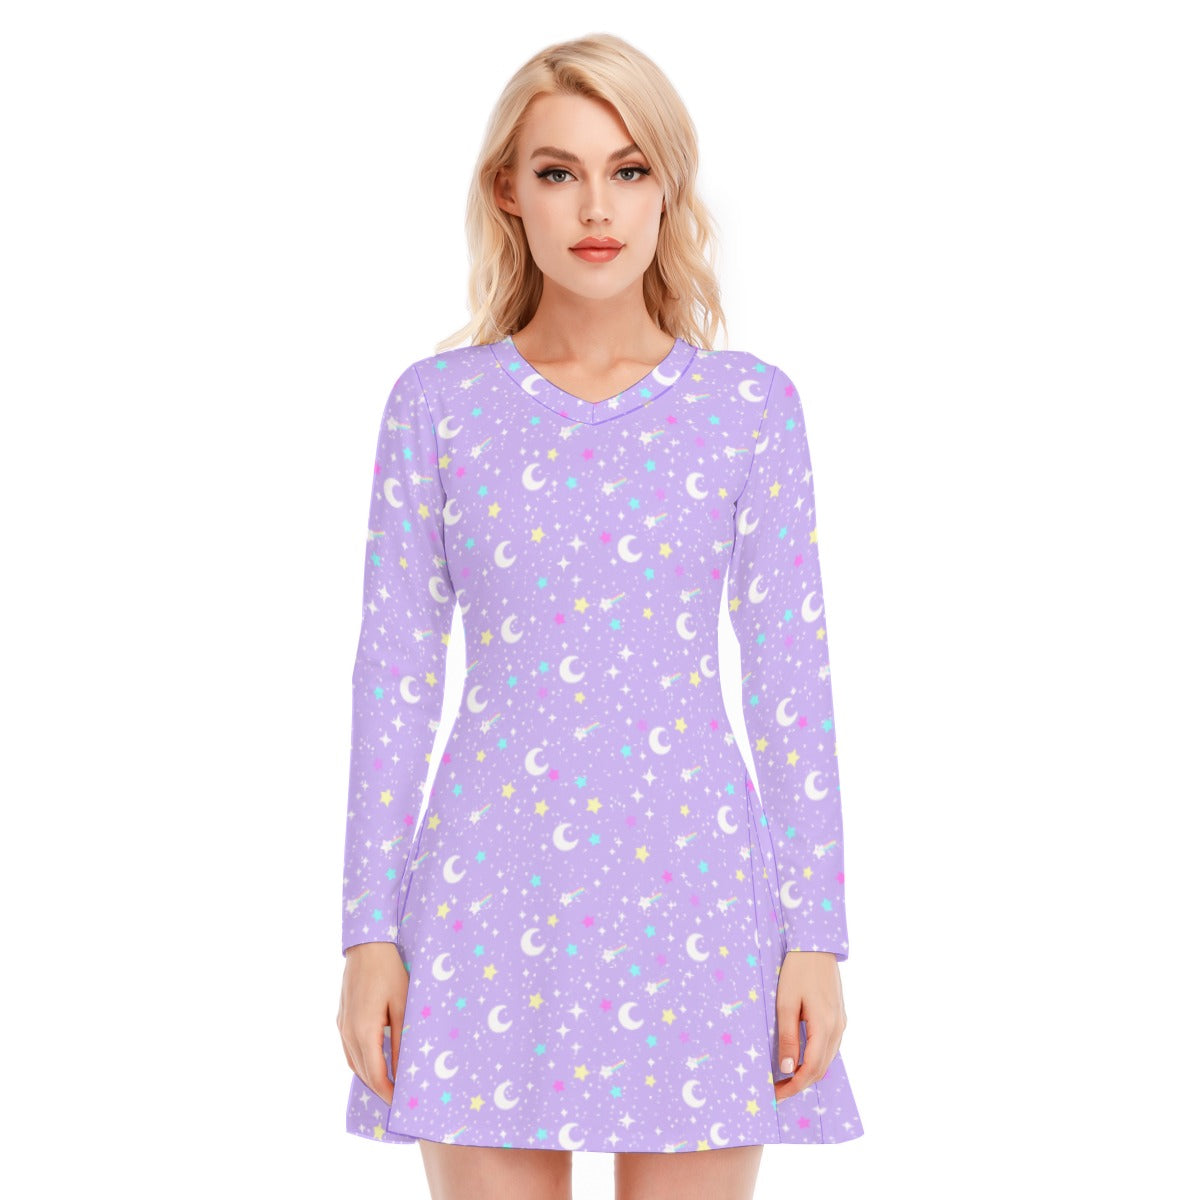 Starry Glitter Women's V-neck Long Sleeve Dress (Purple)